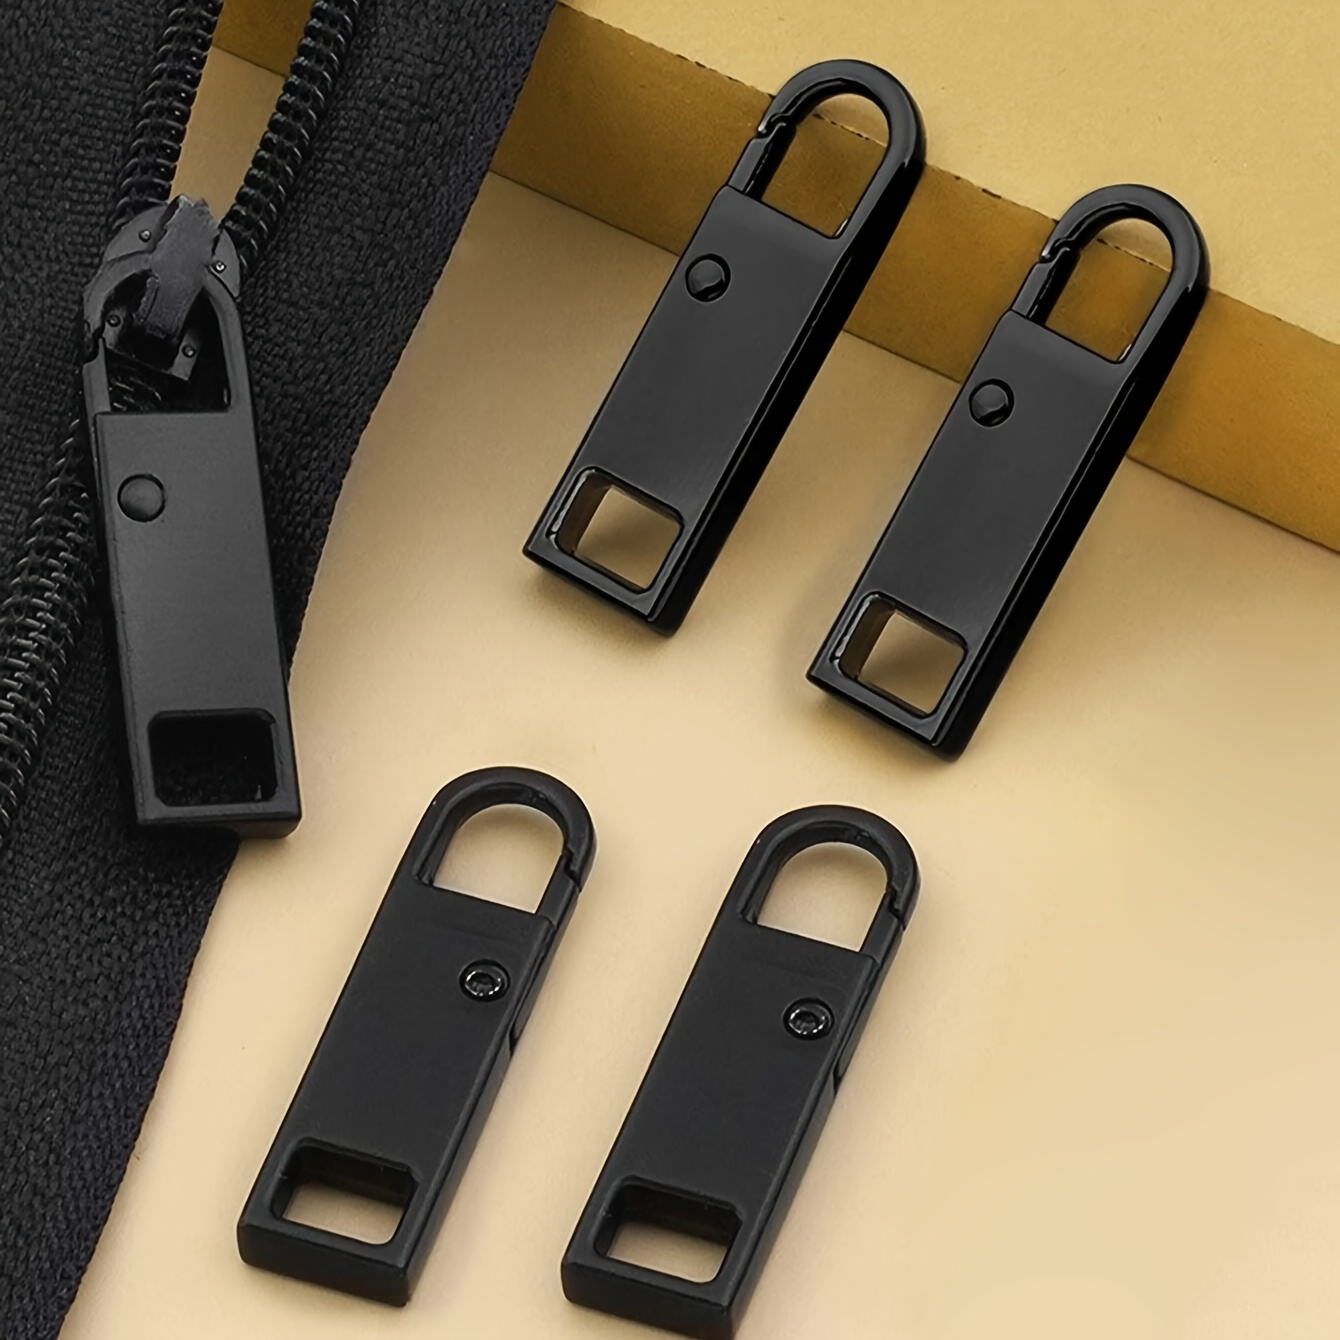 

3pcs Metal Zipper Pull Replacement Kit, Detachable Zipper Heads For Quick Fix Repair In Black And Graphite Colors